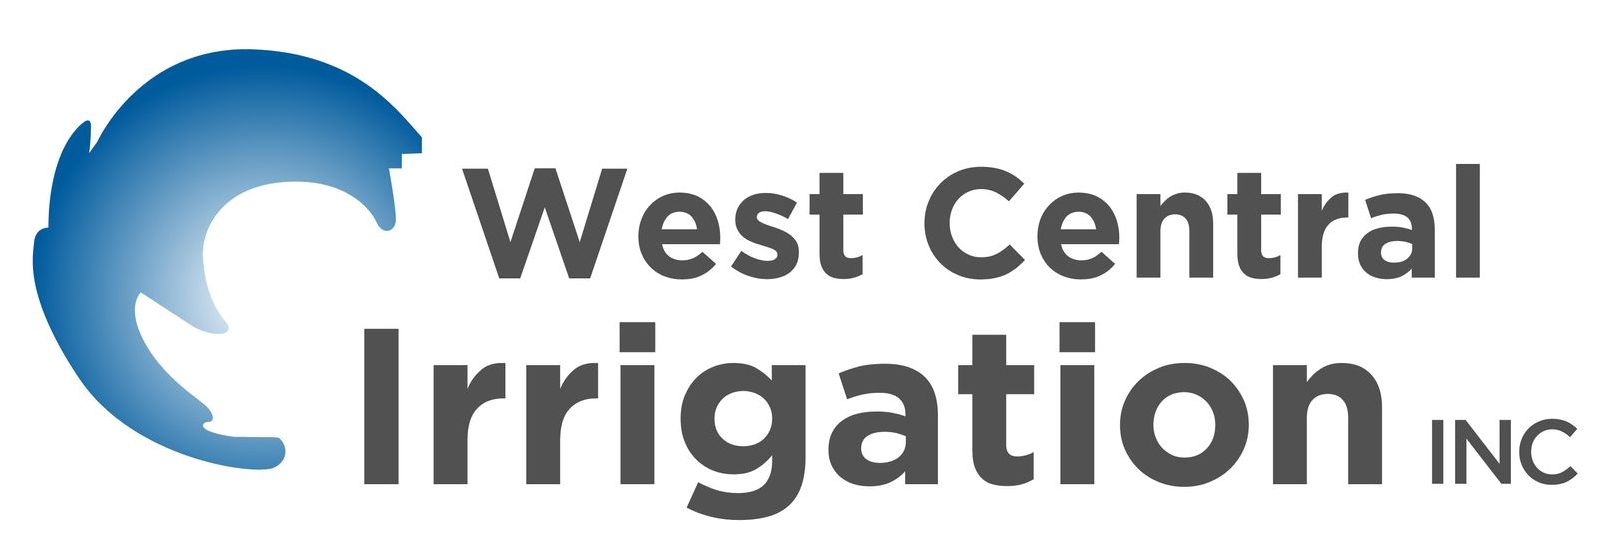 West Central Irrigation Inc._logo